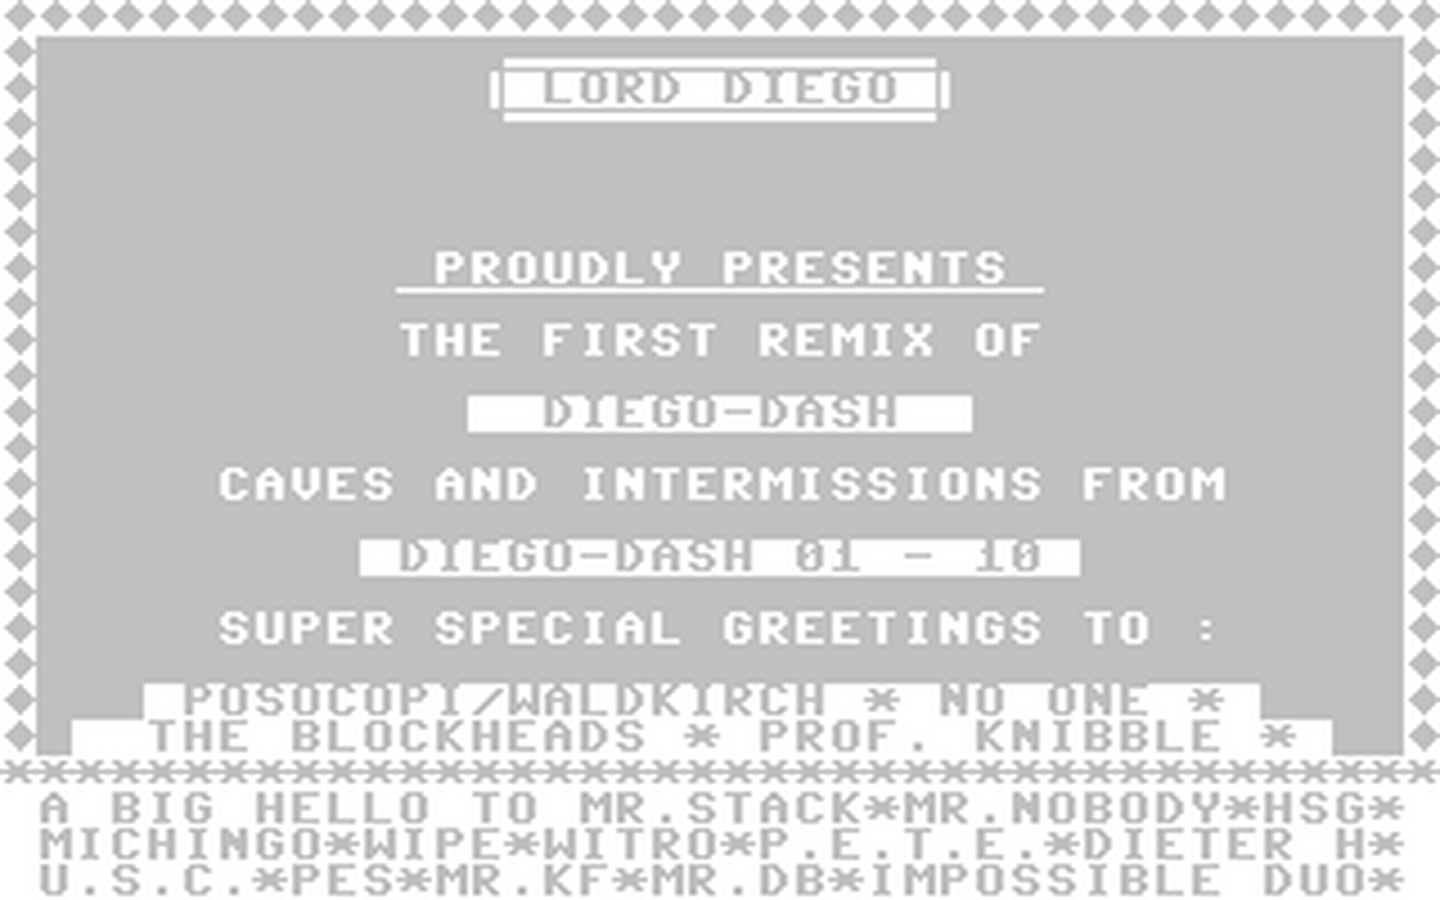 C64 GameBase Diego-Dash_Remix (Not_Published) 1988